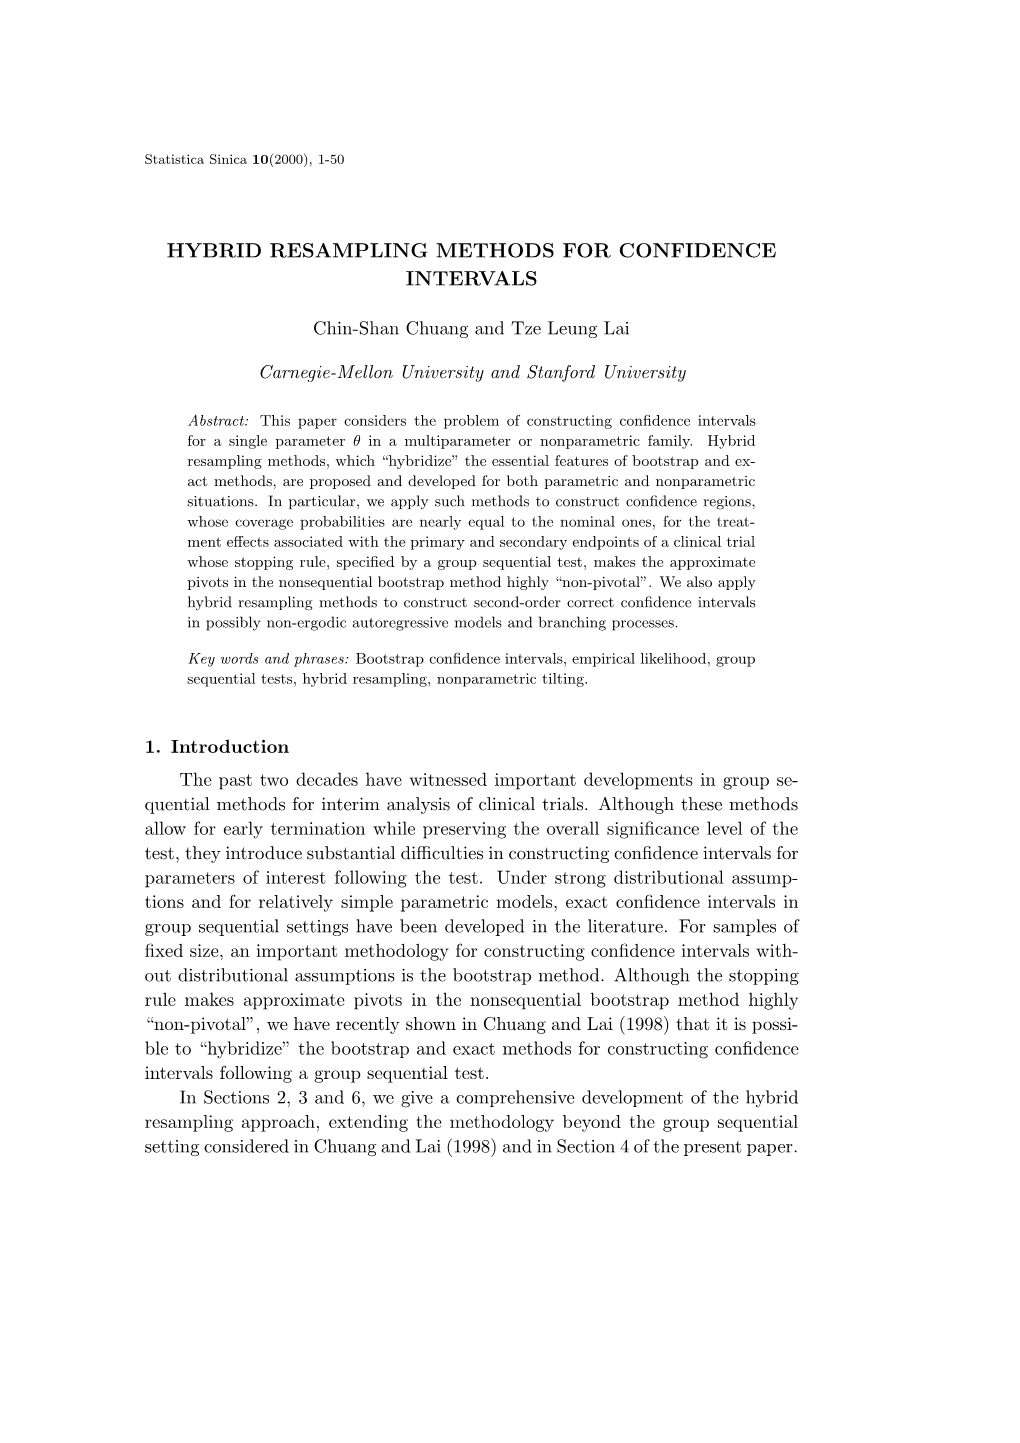 Hybrid Resampling Methods for Confidence Intervals